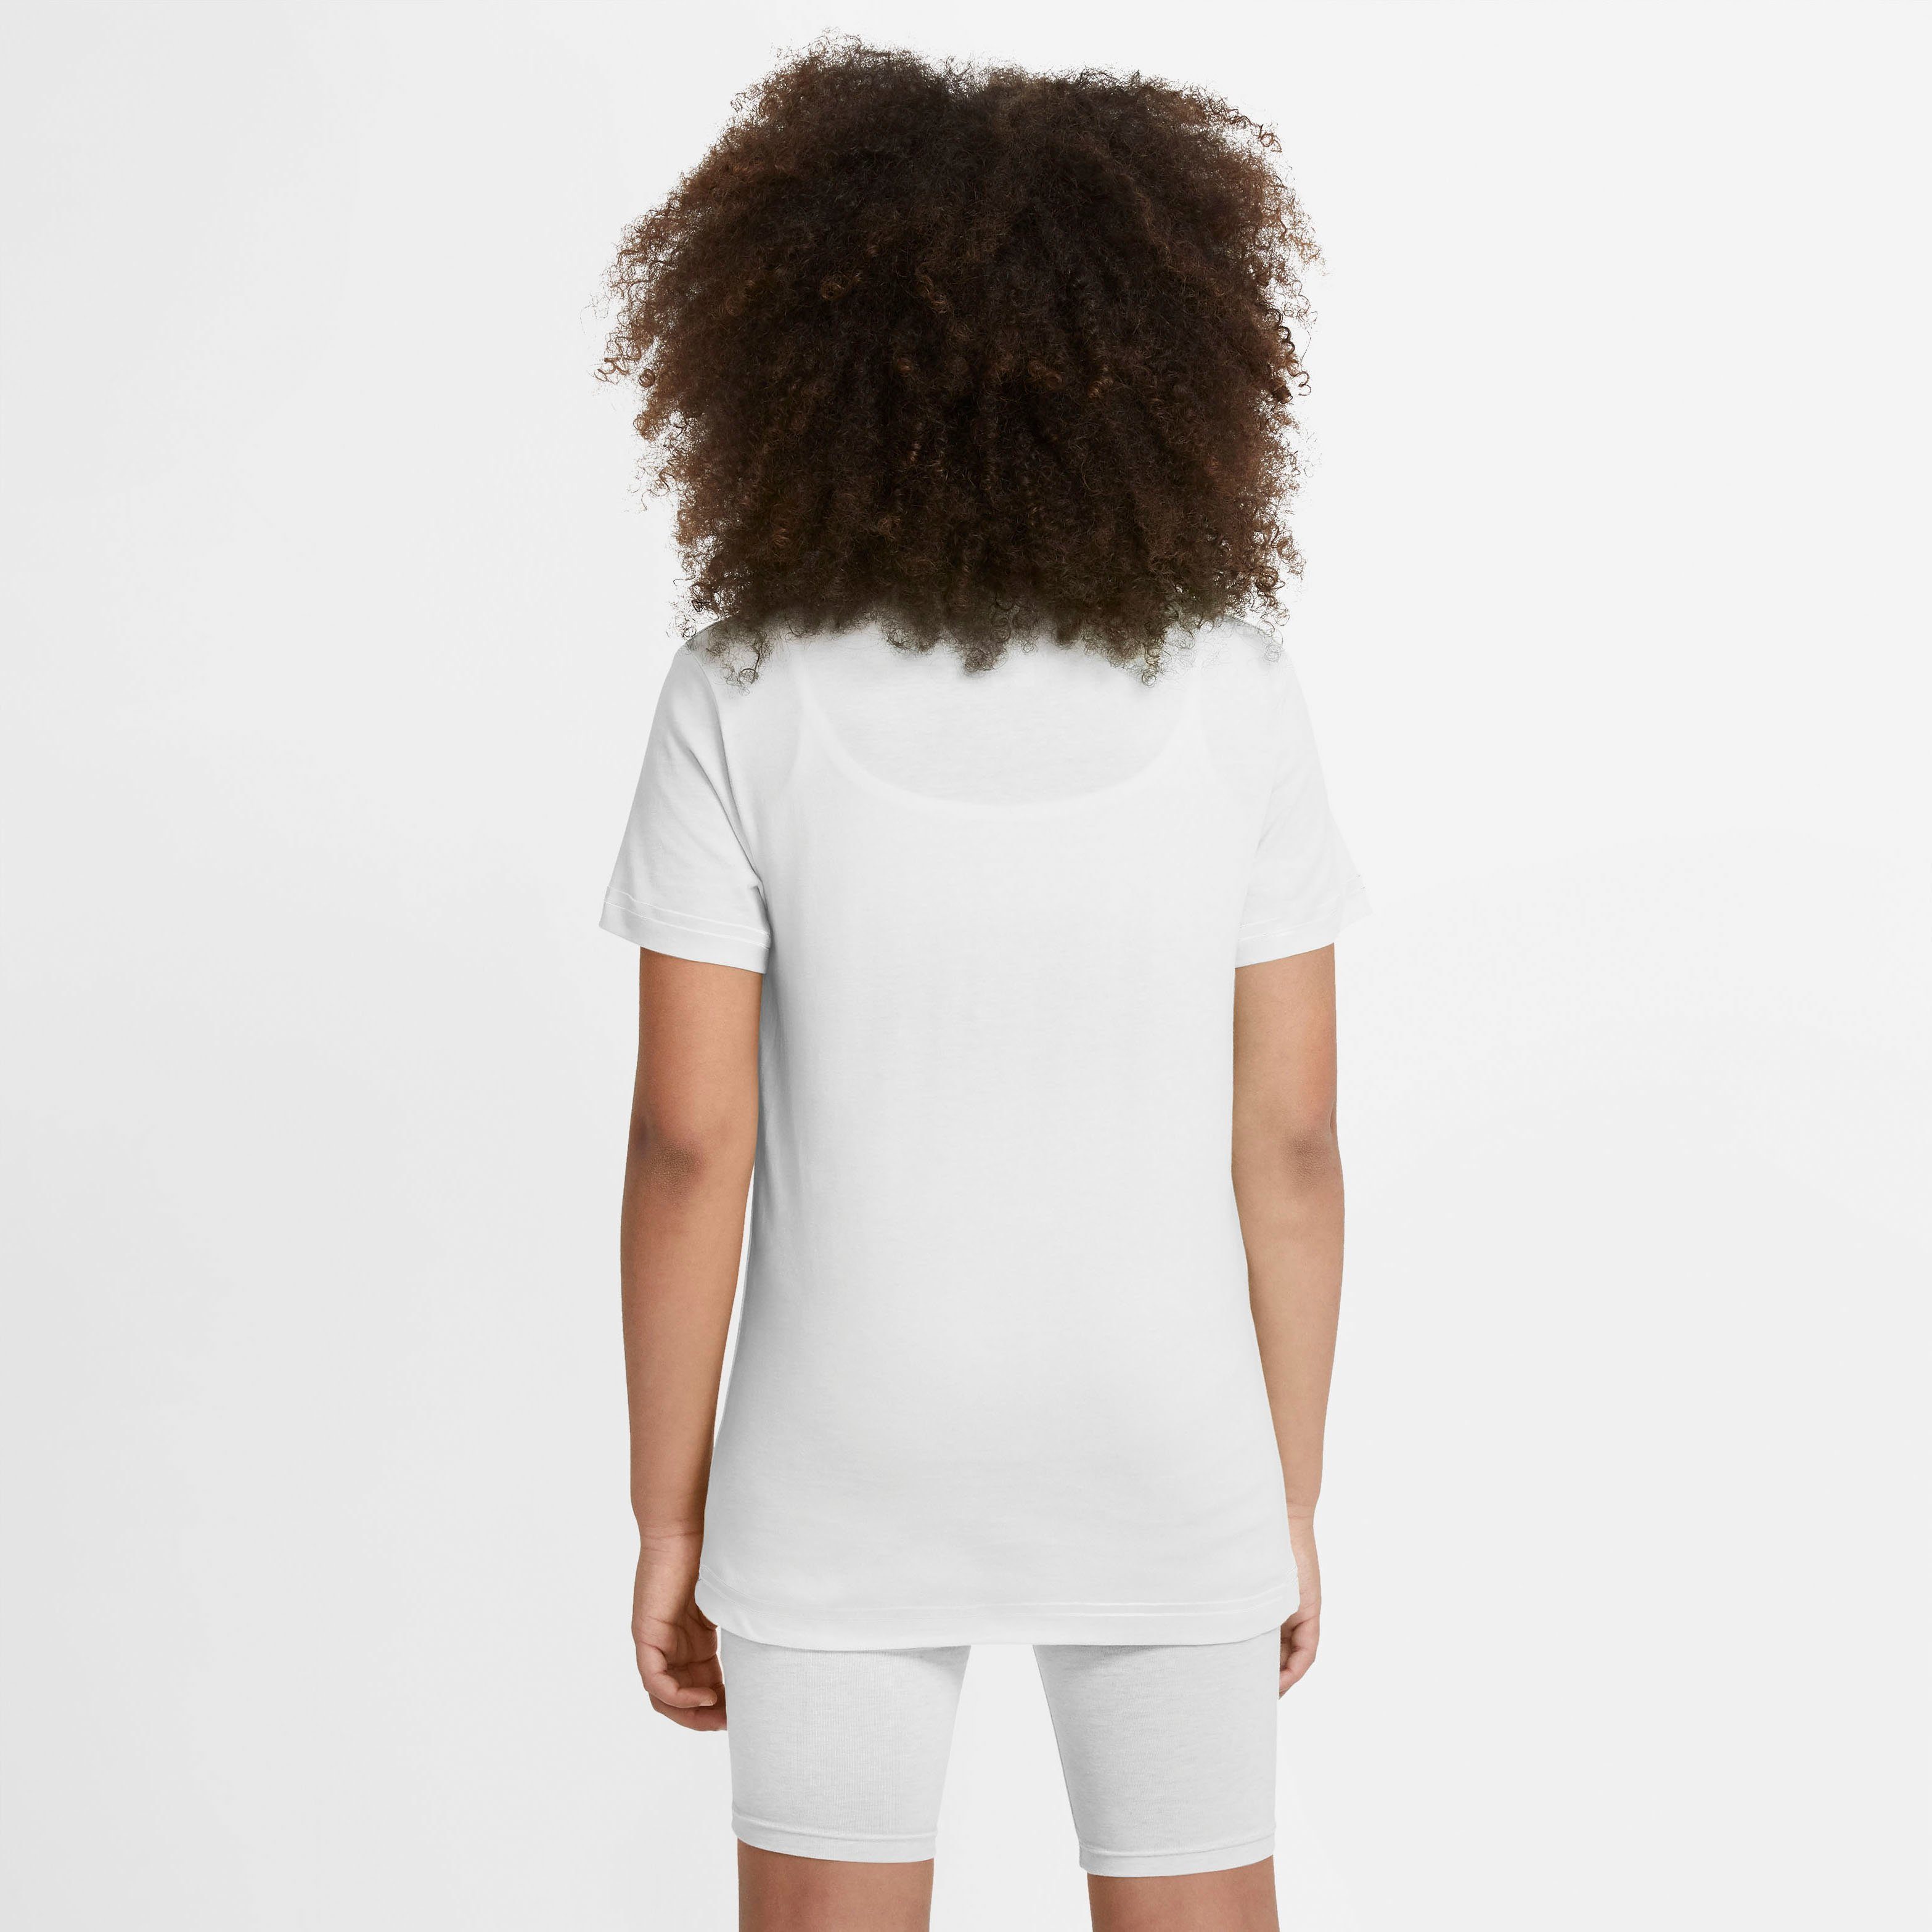 T-Shirt Big (Girls) Nike weiß Kids' T-Shirt Sportswear